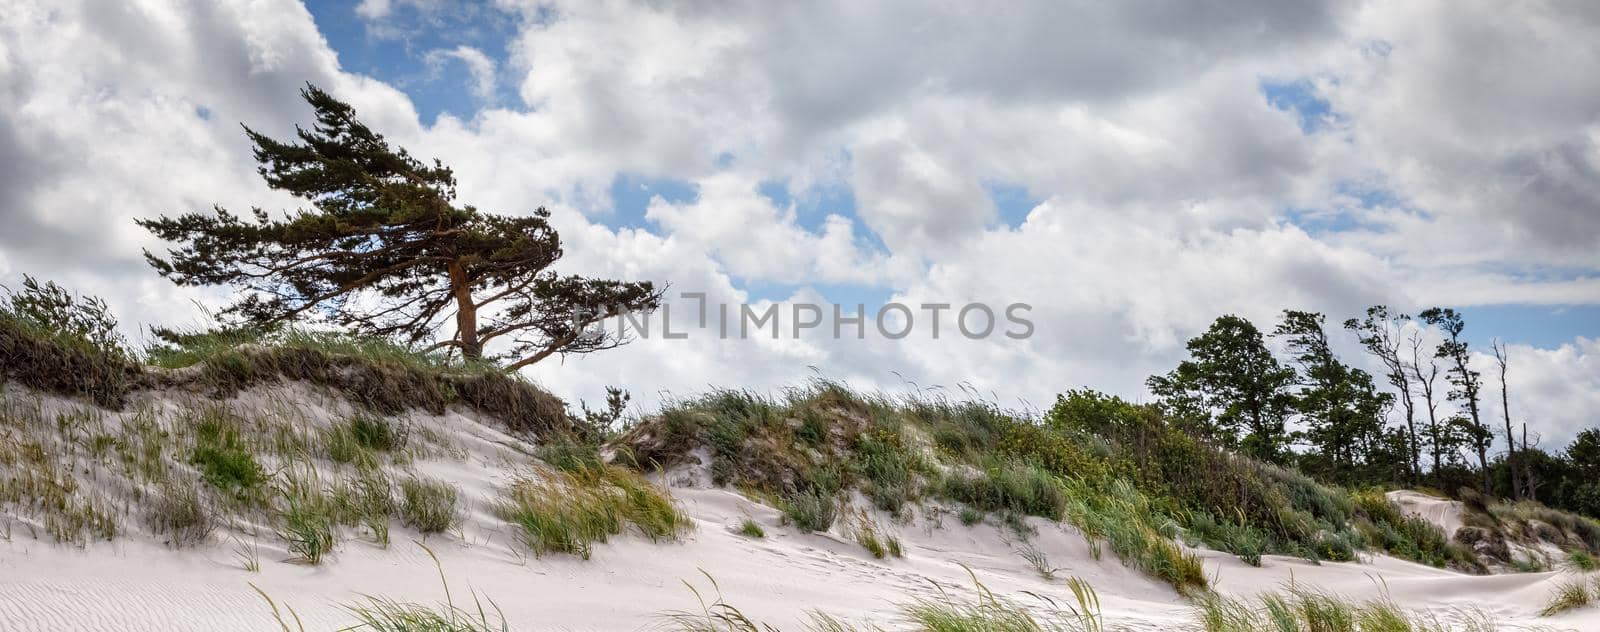 Baltic sea coast near Liepaja, Latvia. Sand dunes with pine trees. Classical Baltic beach landscape. Wild nature